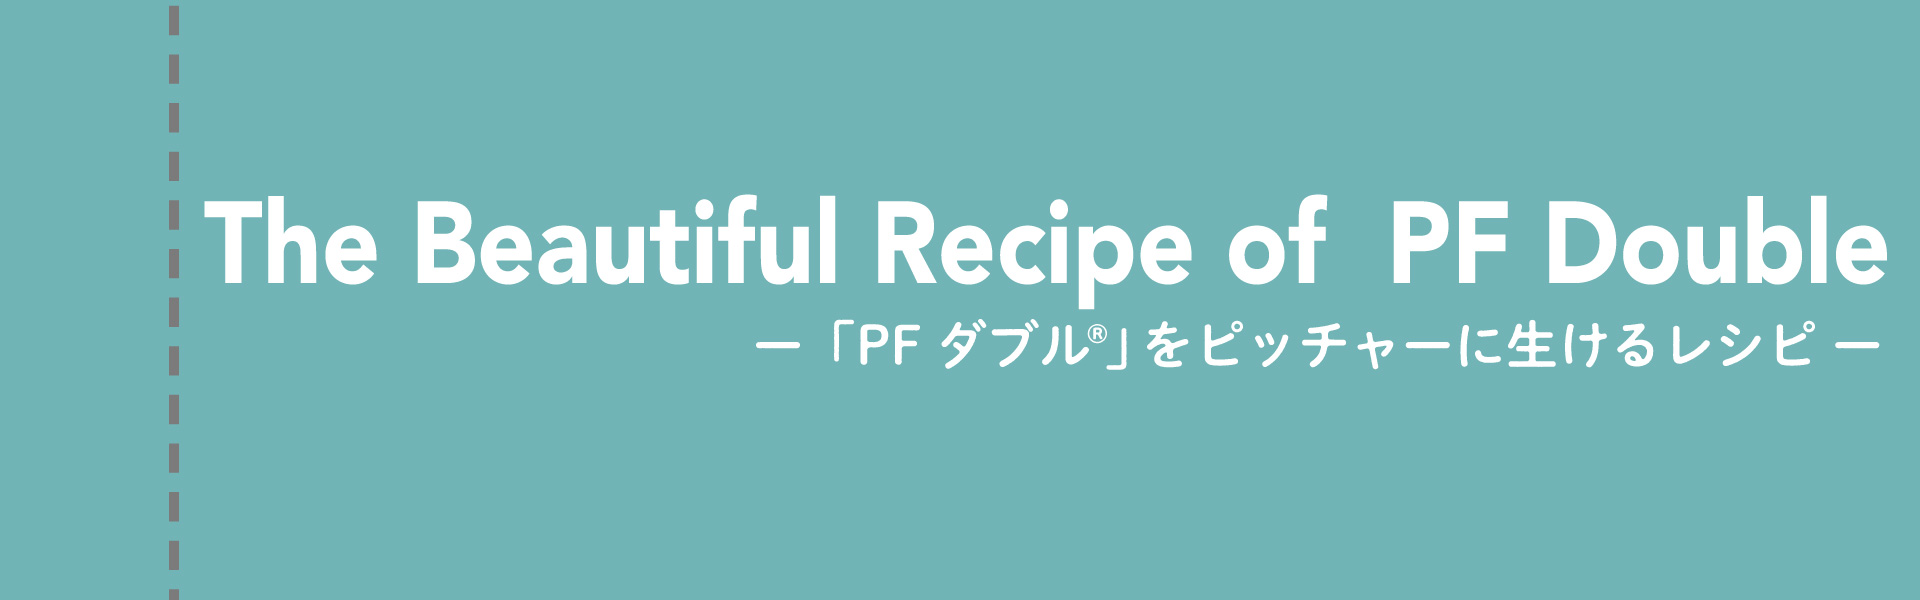 The Beautiful Recipe of PF Double -「PF ダブル」をピッチャーに生ける-